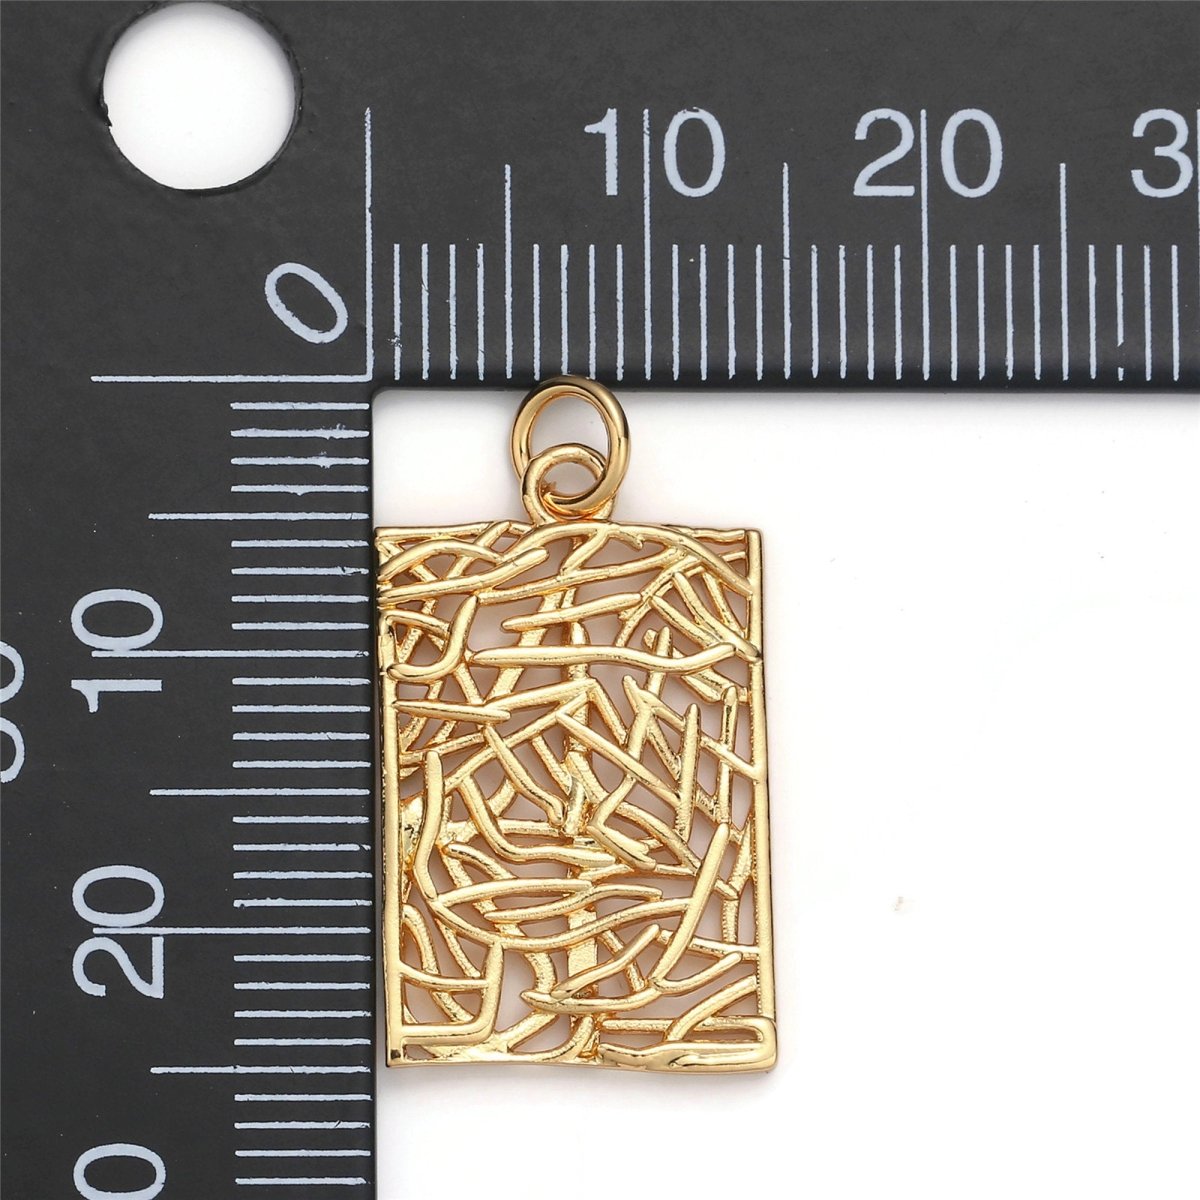 24k Gold Filled Patterned Rectangle Charm, Branch Paisley Pendant Charm, Gold Filled Charm, For DIY Jewelry, Gold Color D-055 - DLUXCA